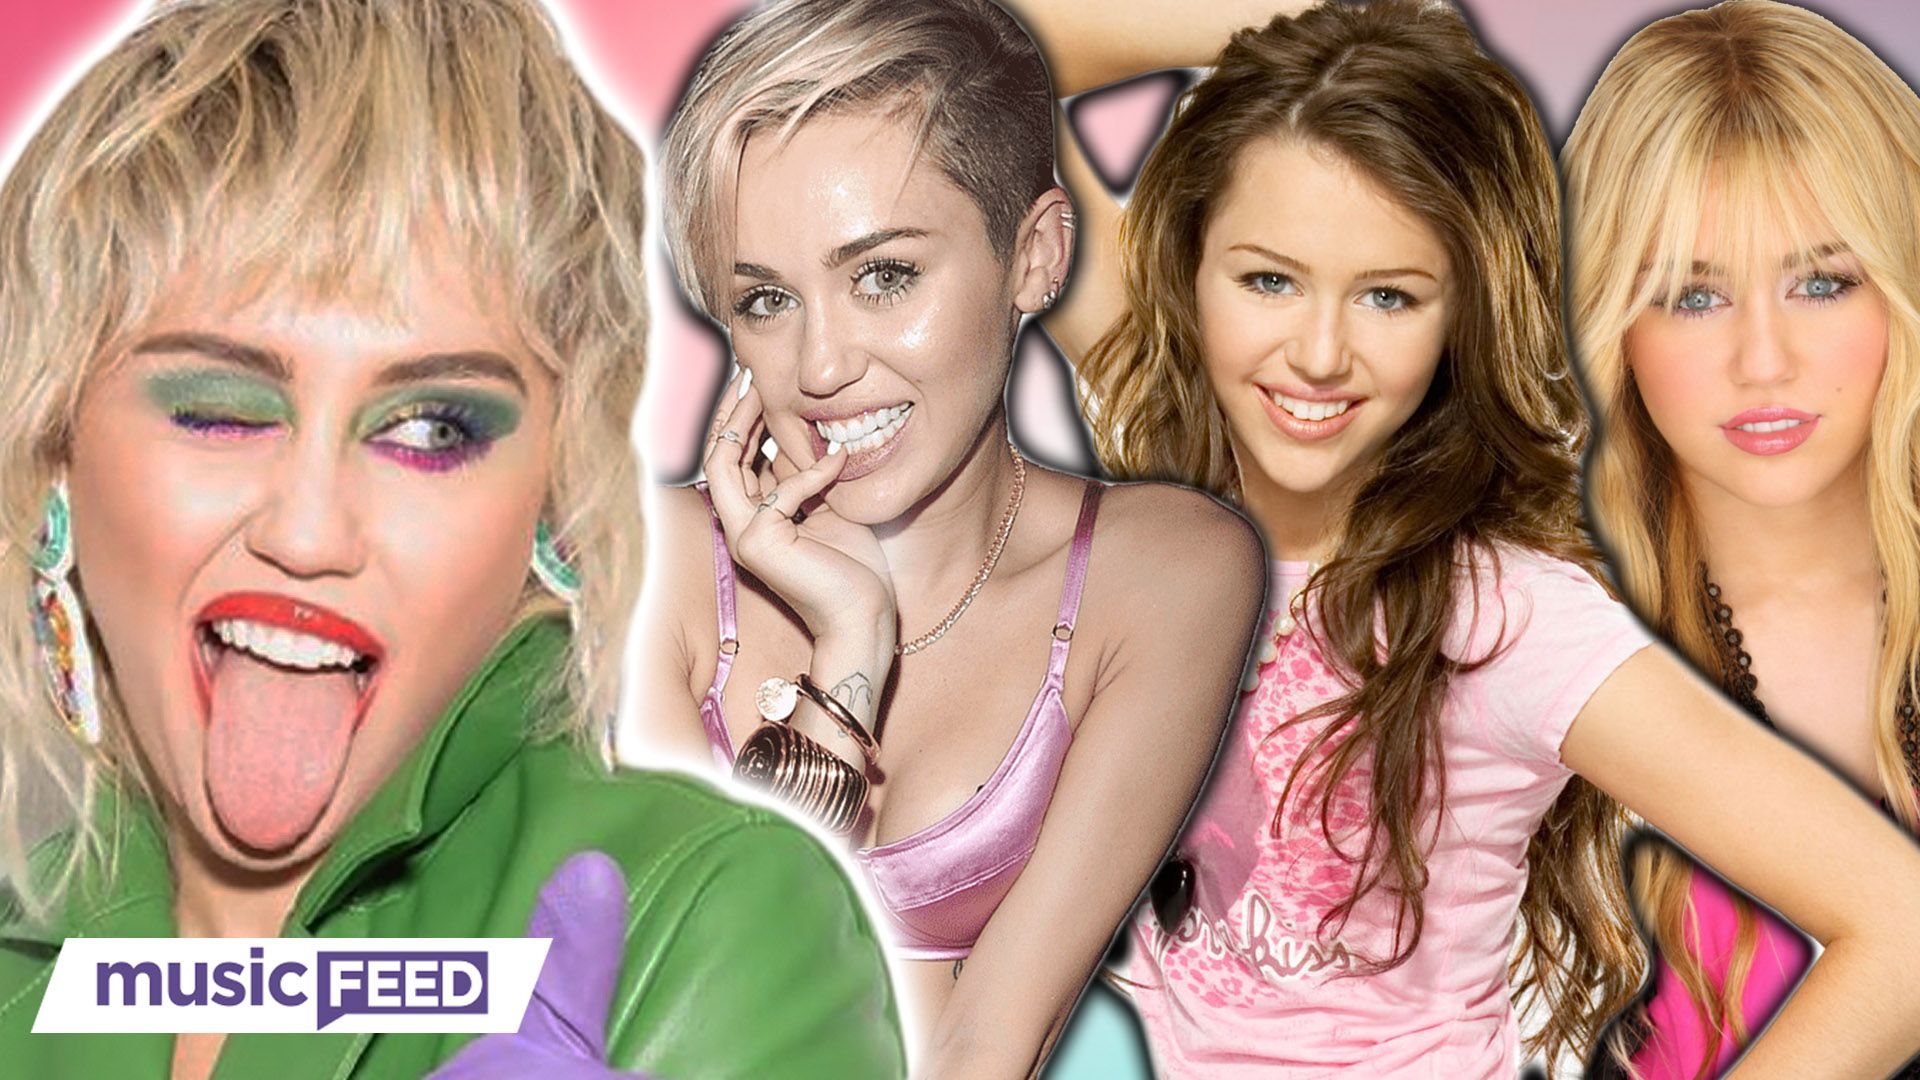 New Miley Cyrus album 'Plastic Hearts